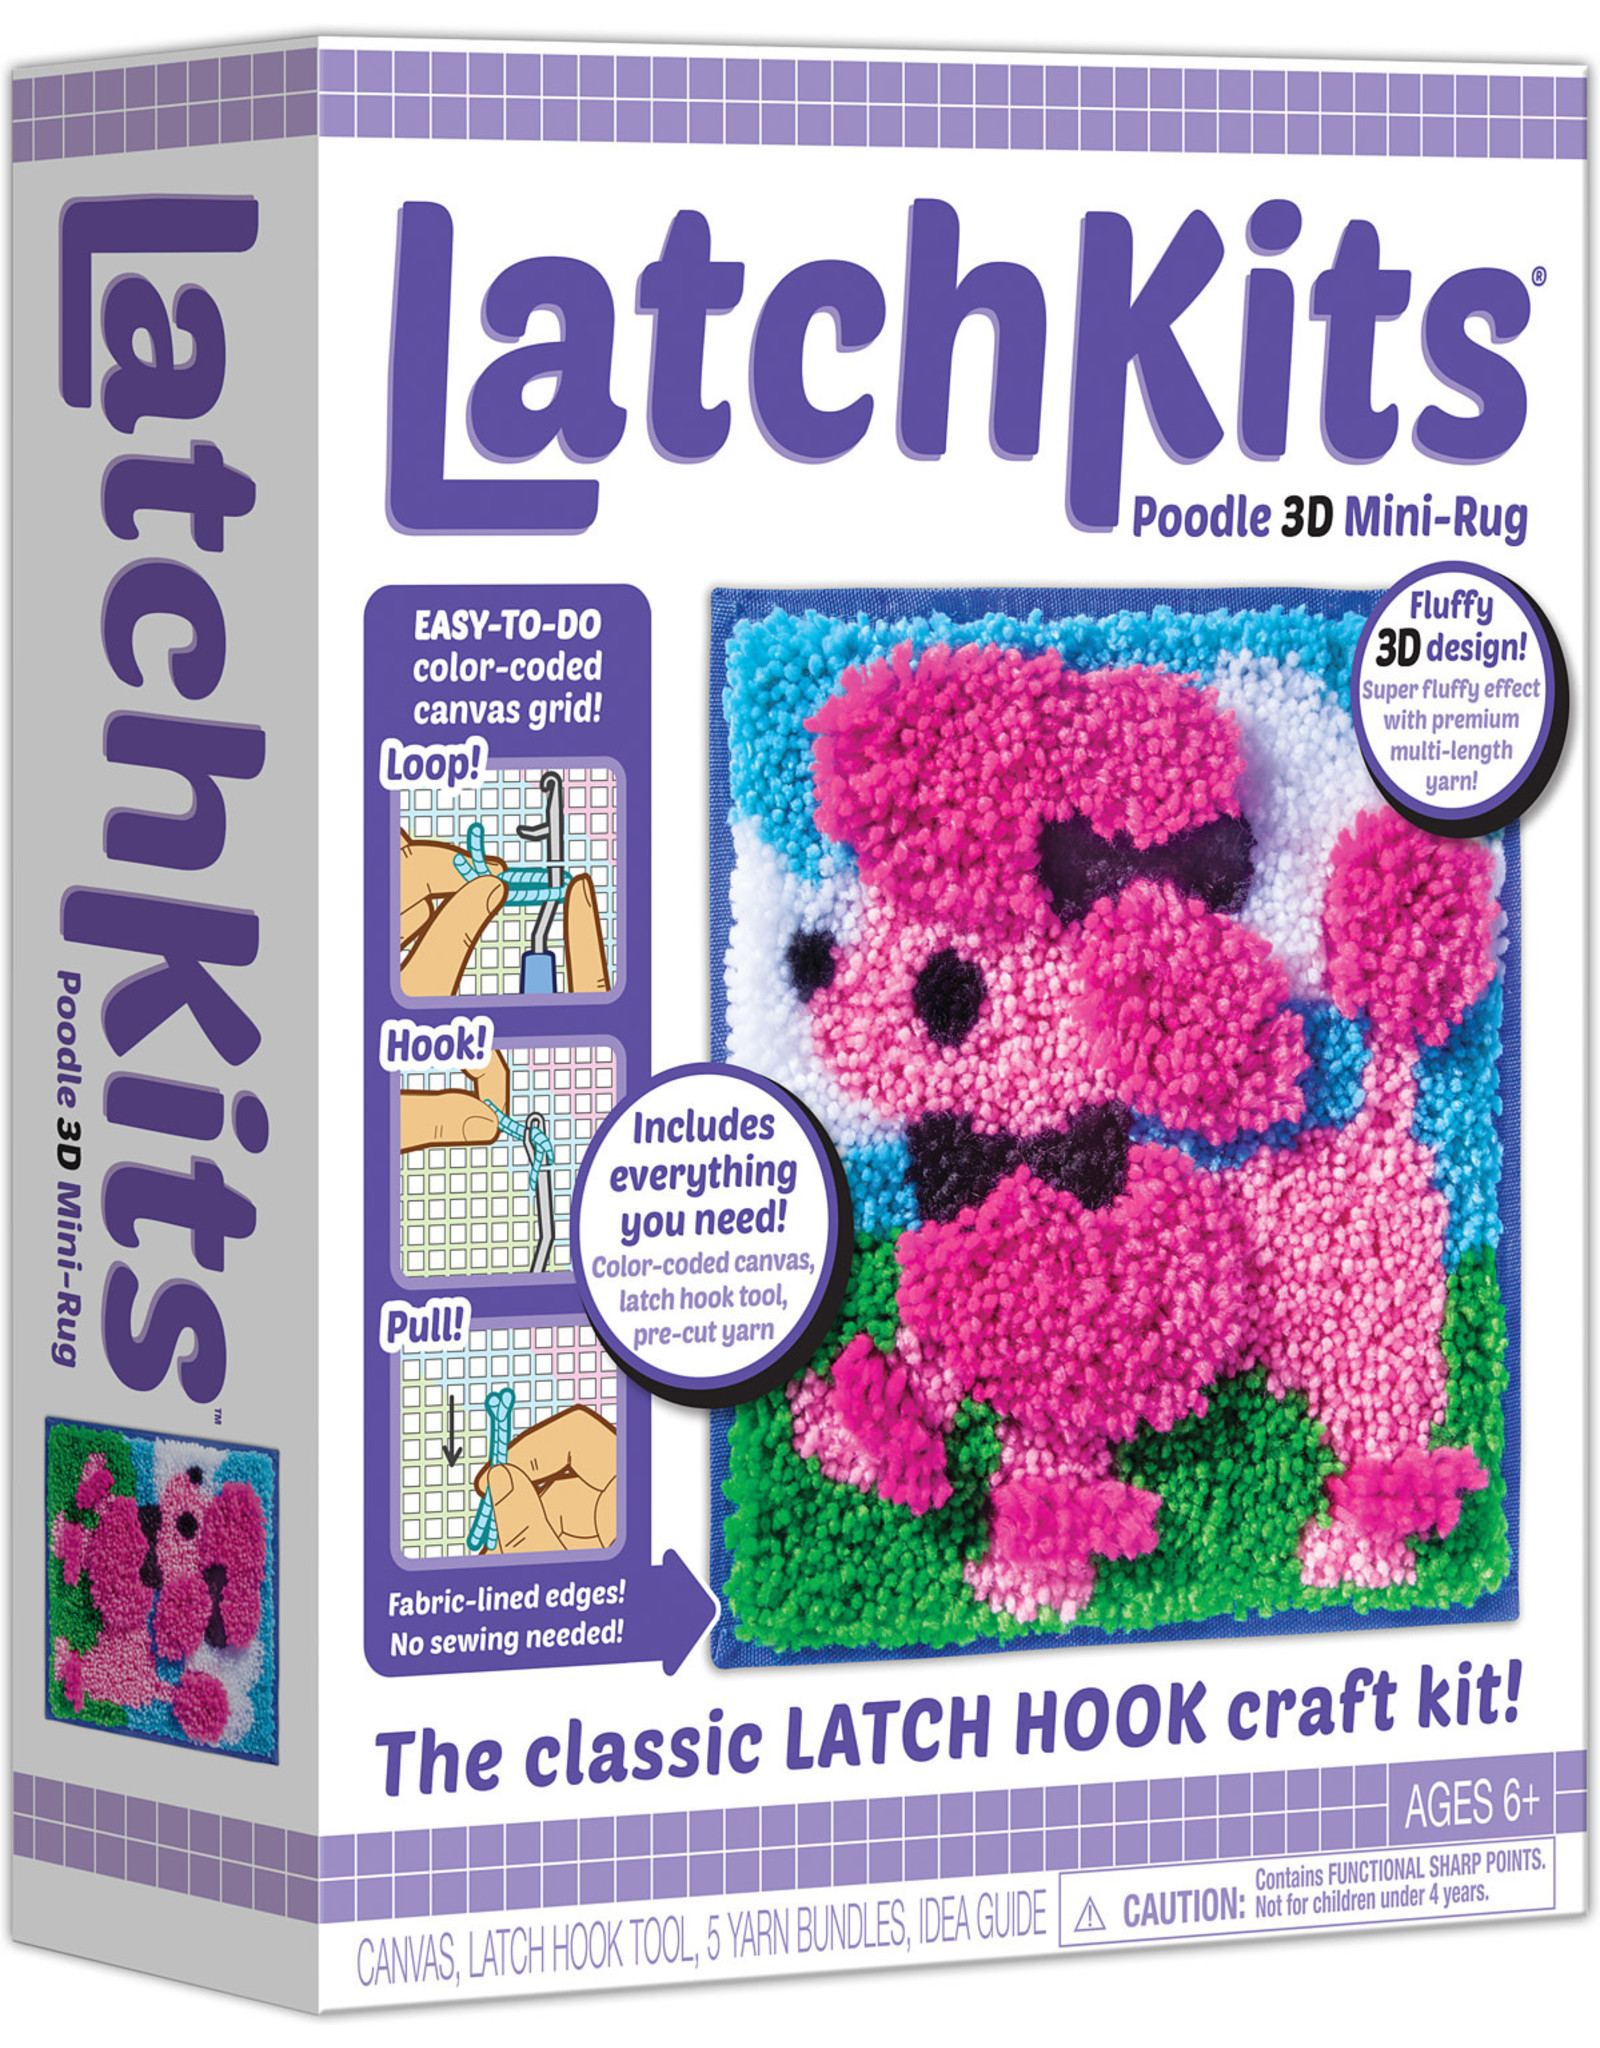 Playmonster LatchKits - Poodle 3D